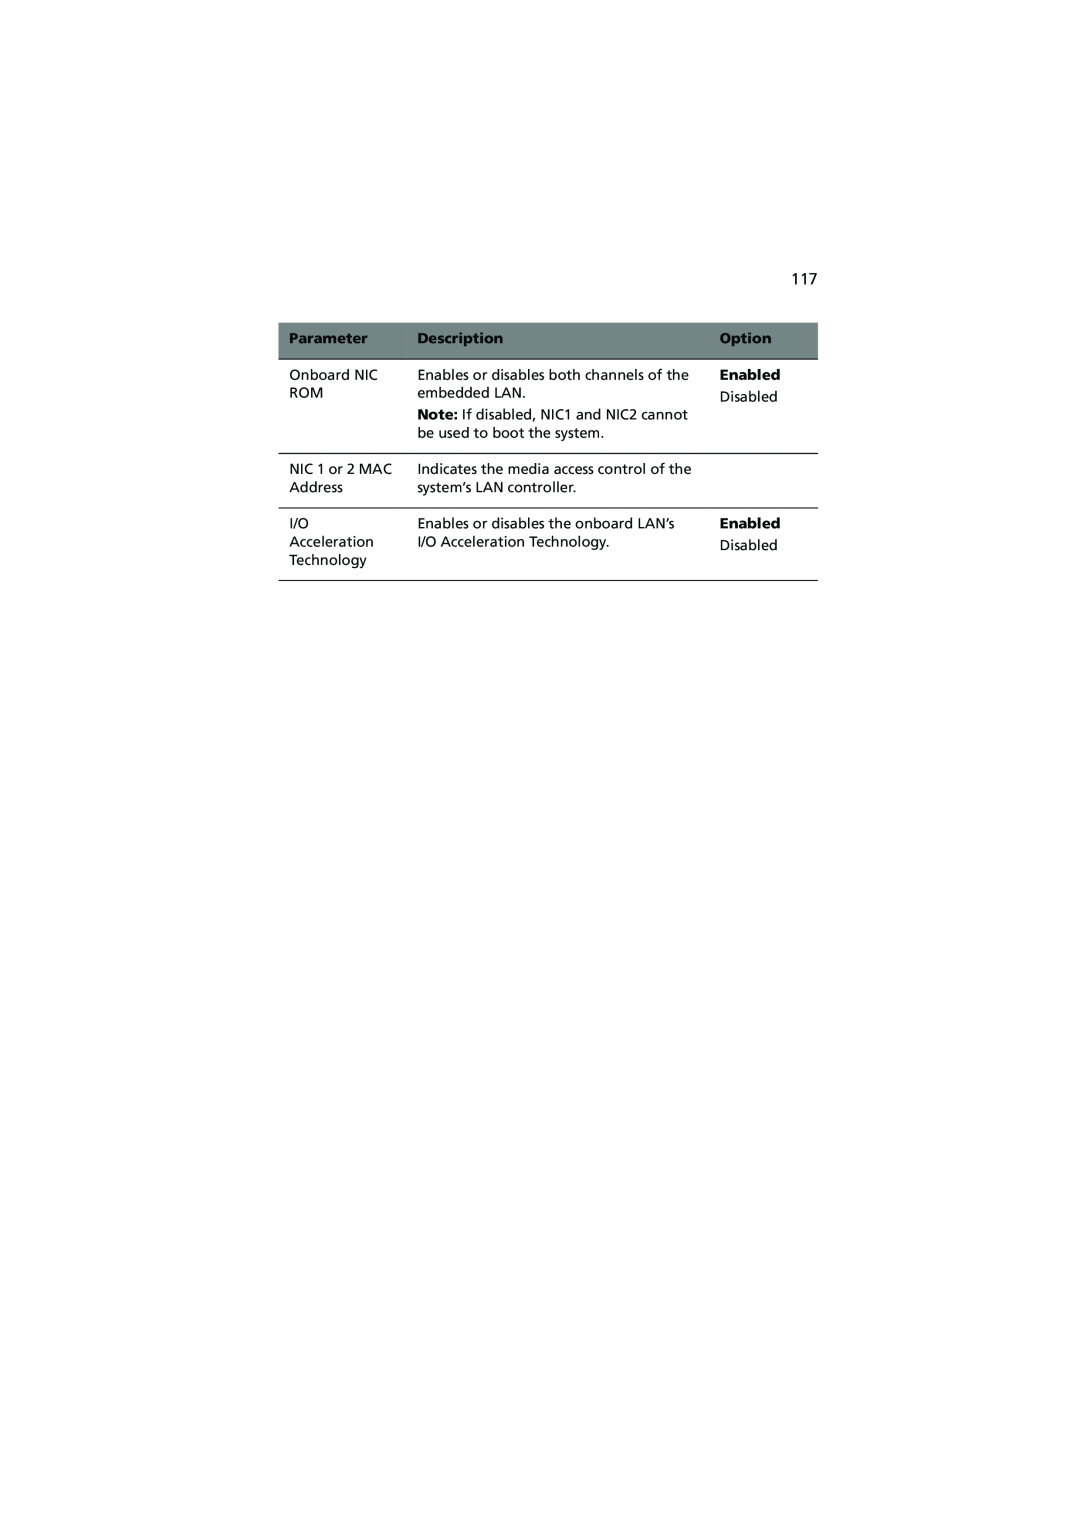 Acer R720 Series manual Parameter, Description, Option, Enabled 